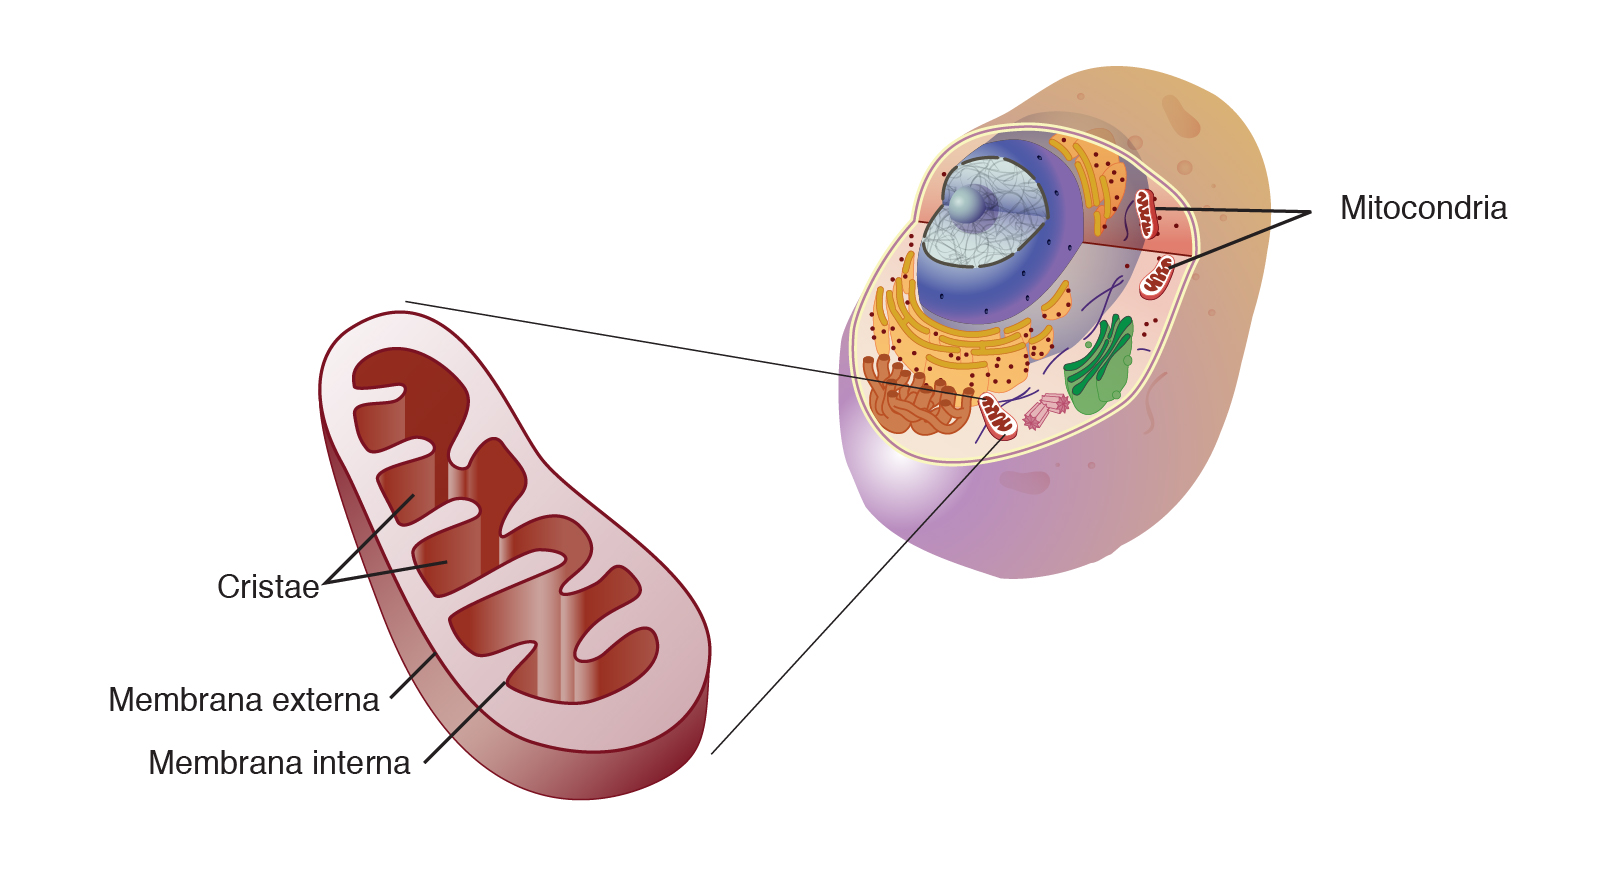 Figura 1. Célula eucariota. En la imagen se observa una célula eucariota y se muestra una mitocondria. Figura tomada de https://www.genome.gov/sites/default/files/tg/es/illustration/___Mitocondria.jpg